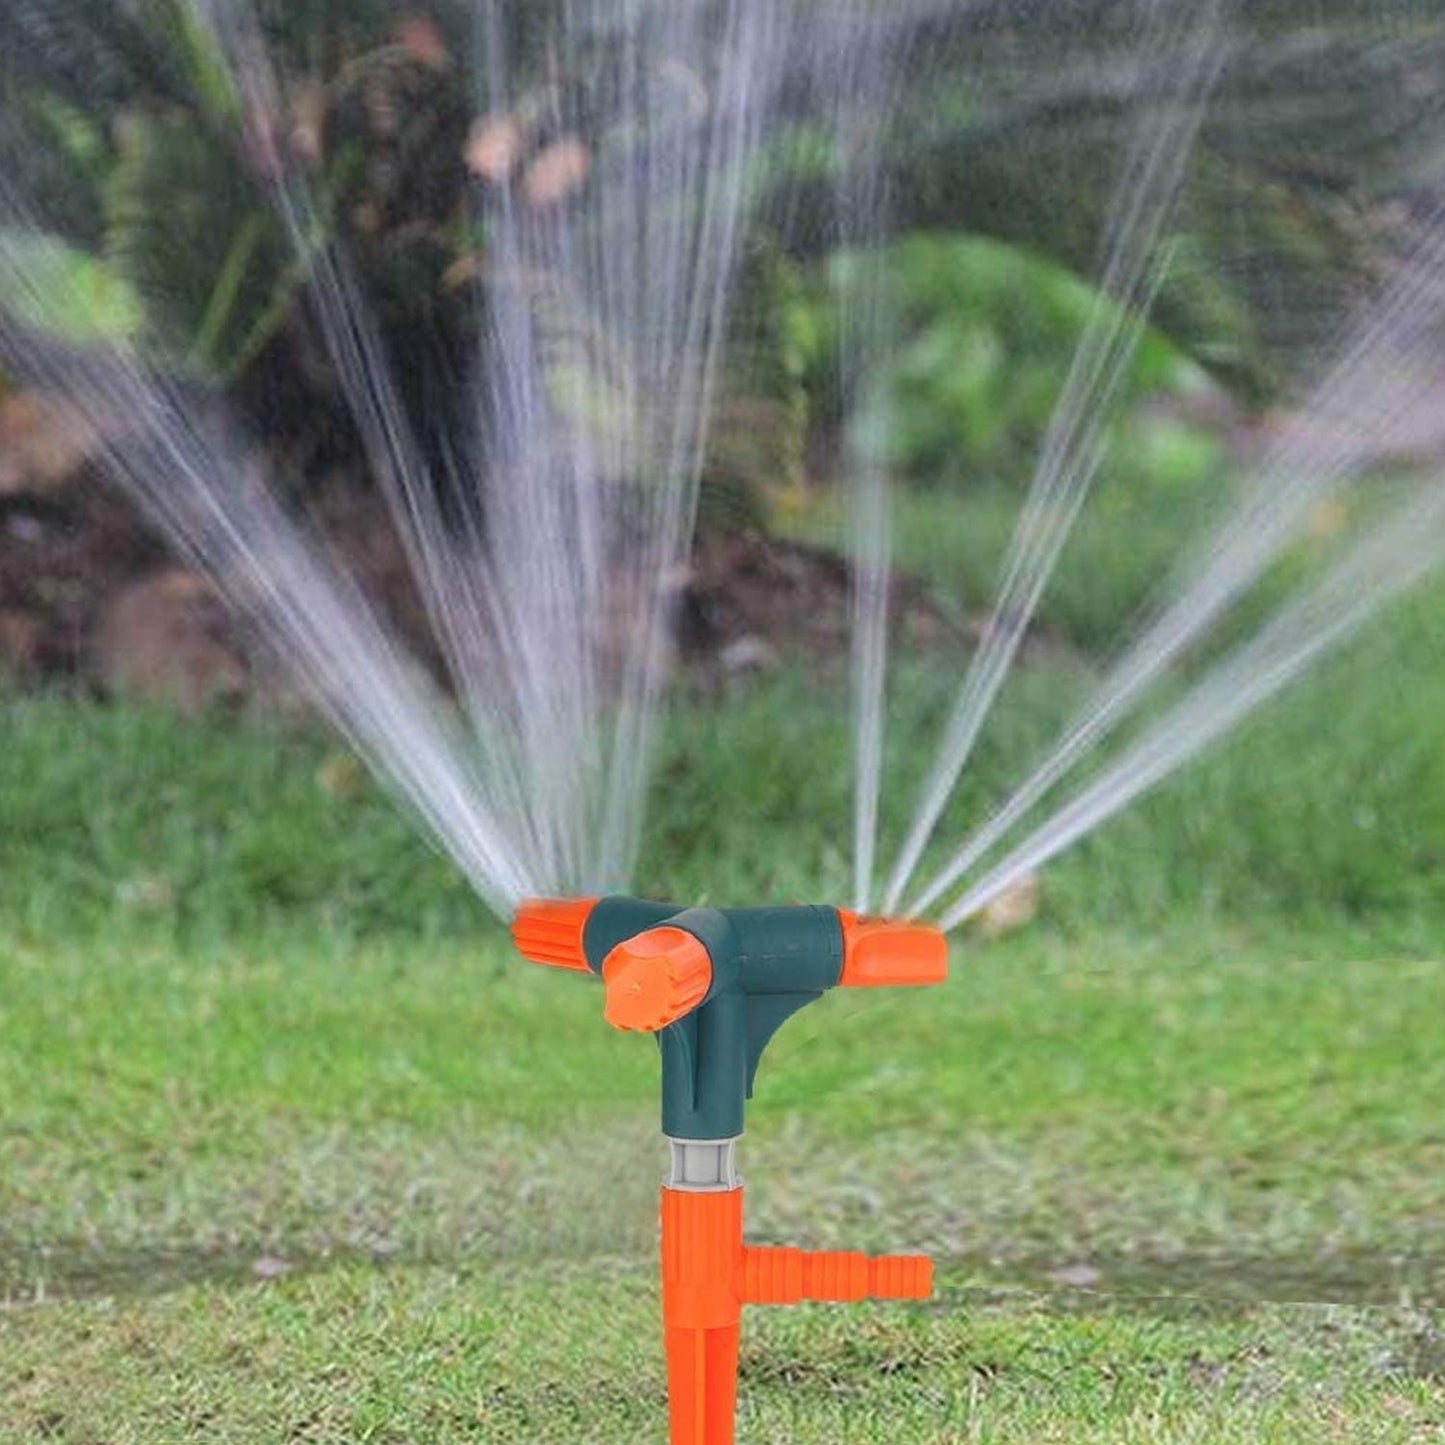 7537 Garden Sprinkler 360 ° Rotating Adjustable Round 3 Arm Lawn Water Sprinkler for Watering Garden Plants/Pipe Hose Irrigation Yard Water Sprayer Dukandaily